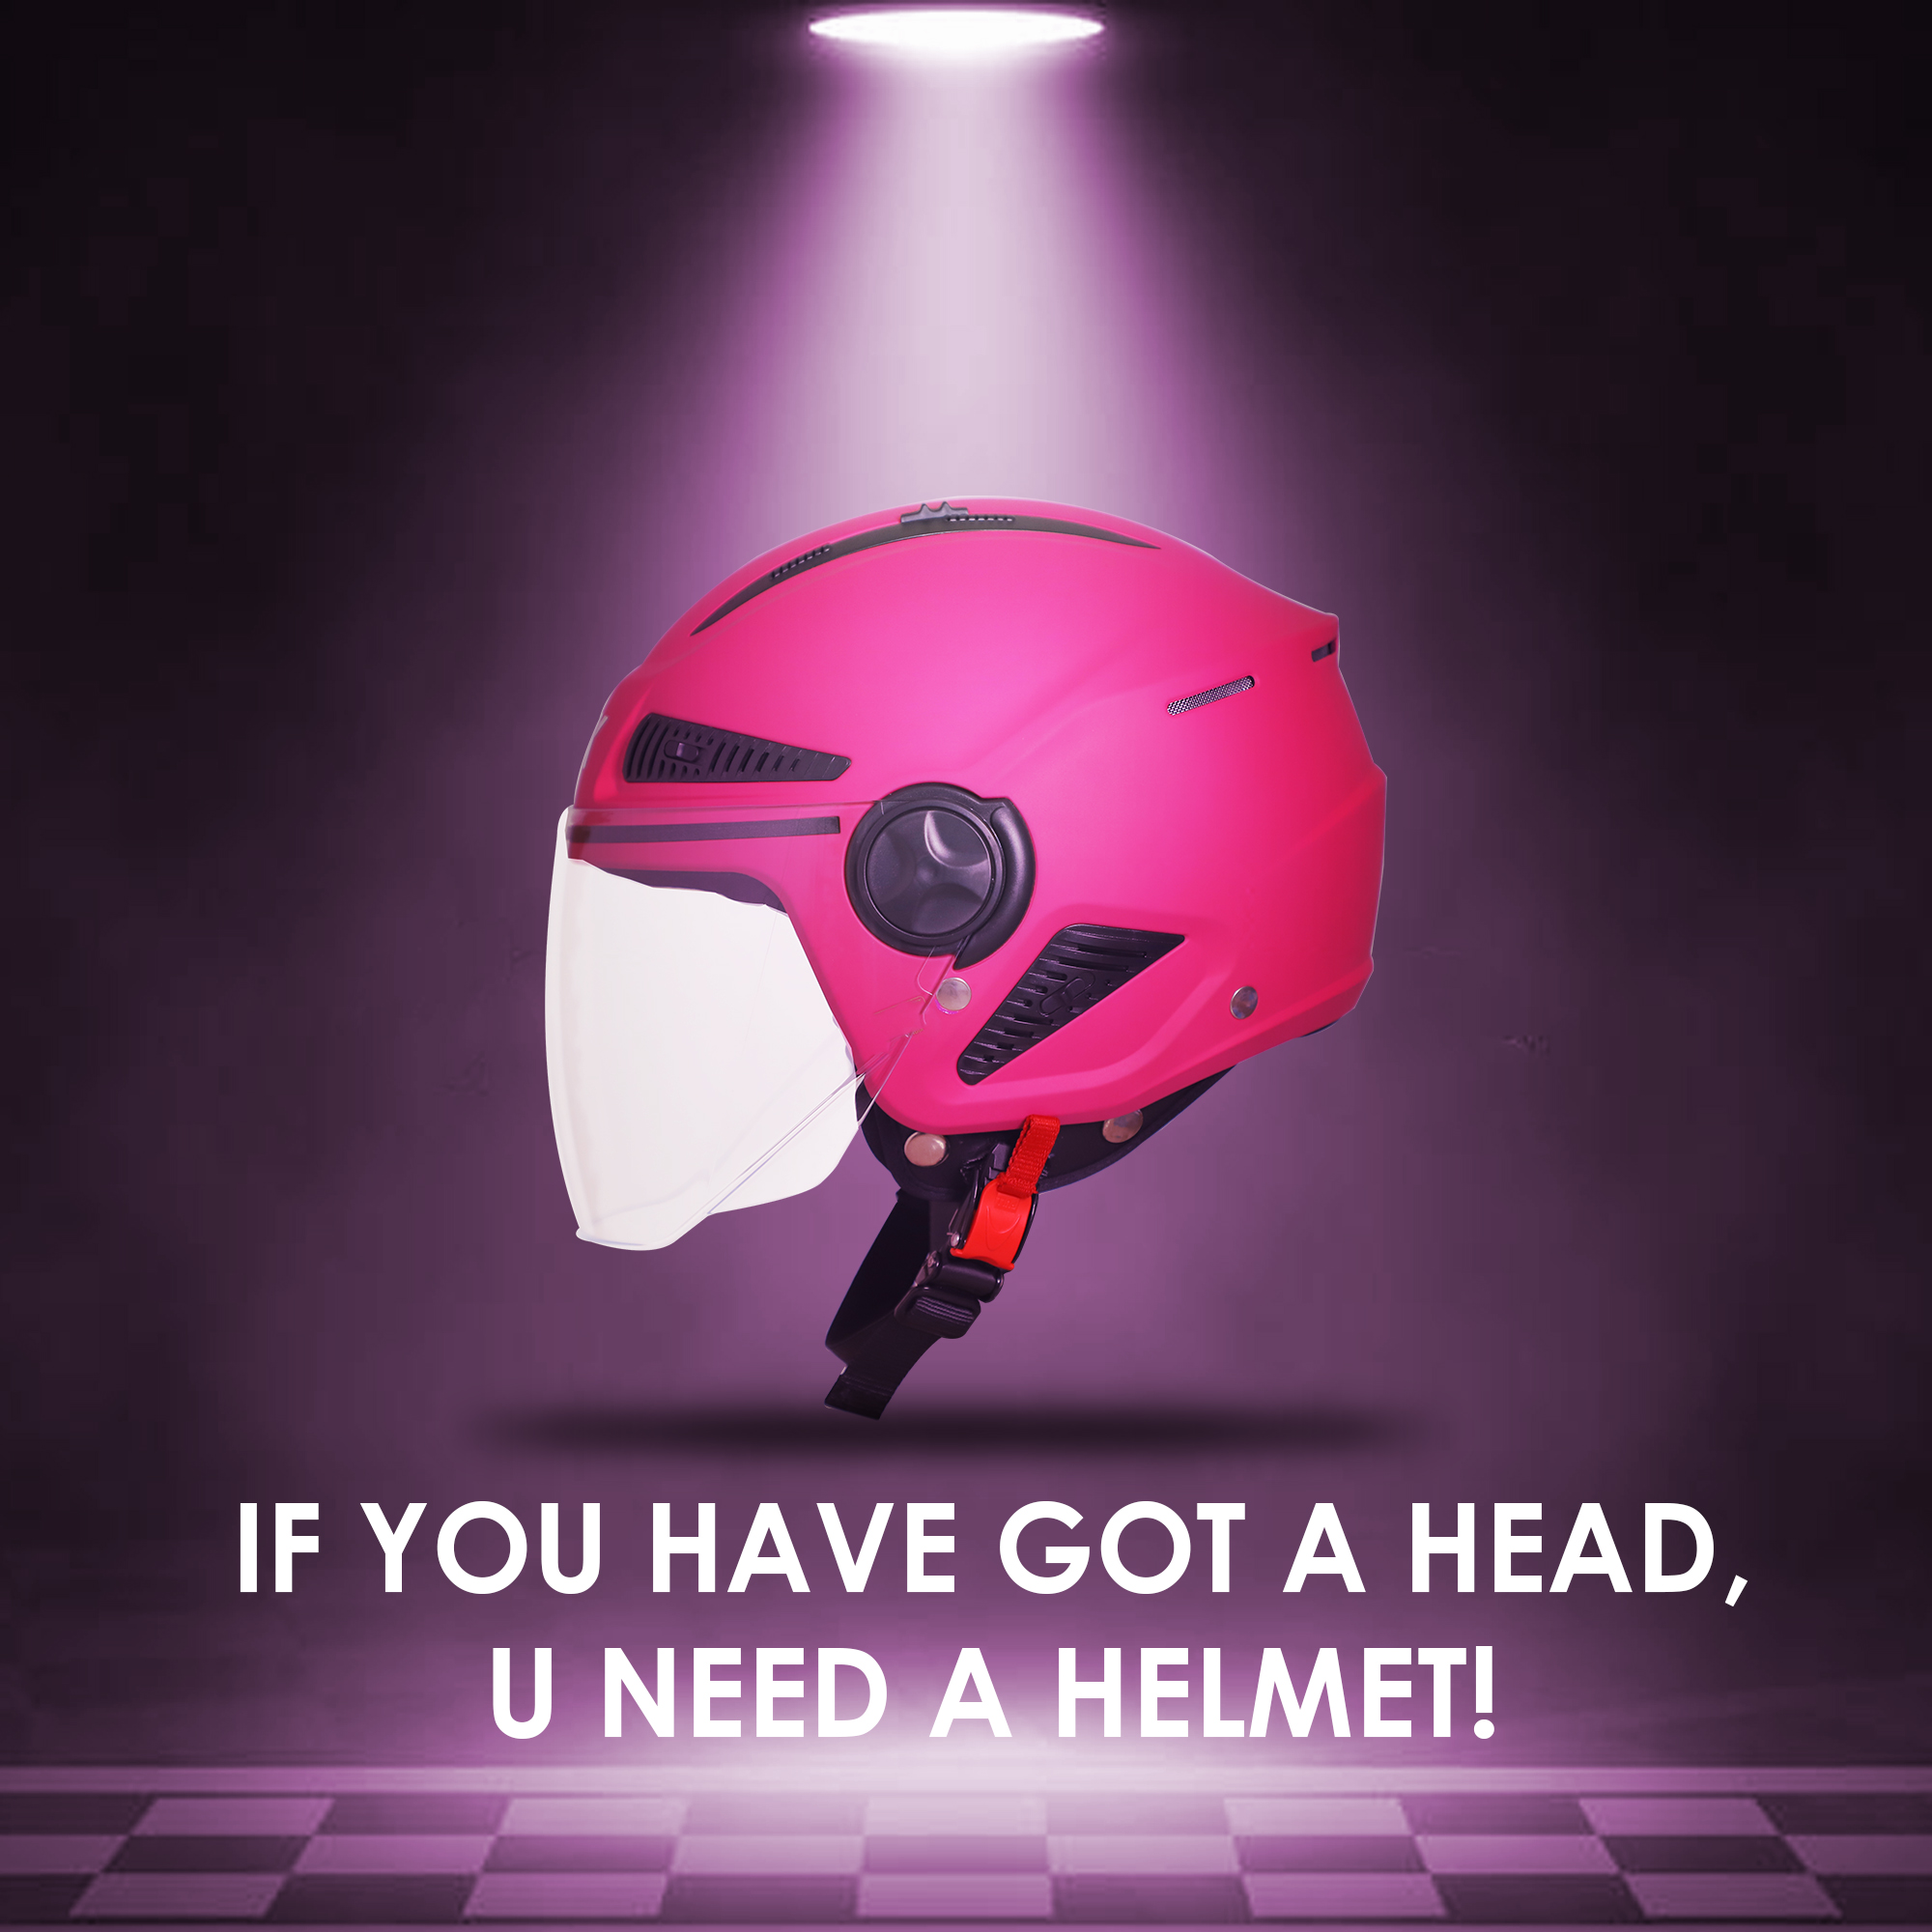 Steelbird SBH-24 Boxx ISI Certified Open Face Helmet For Men And Women (Matt Magenta With Clear Visor)